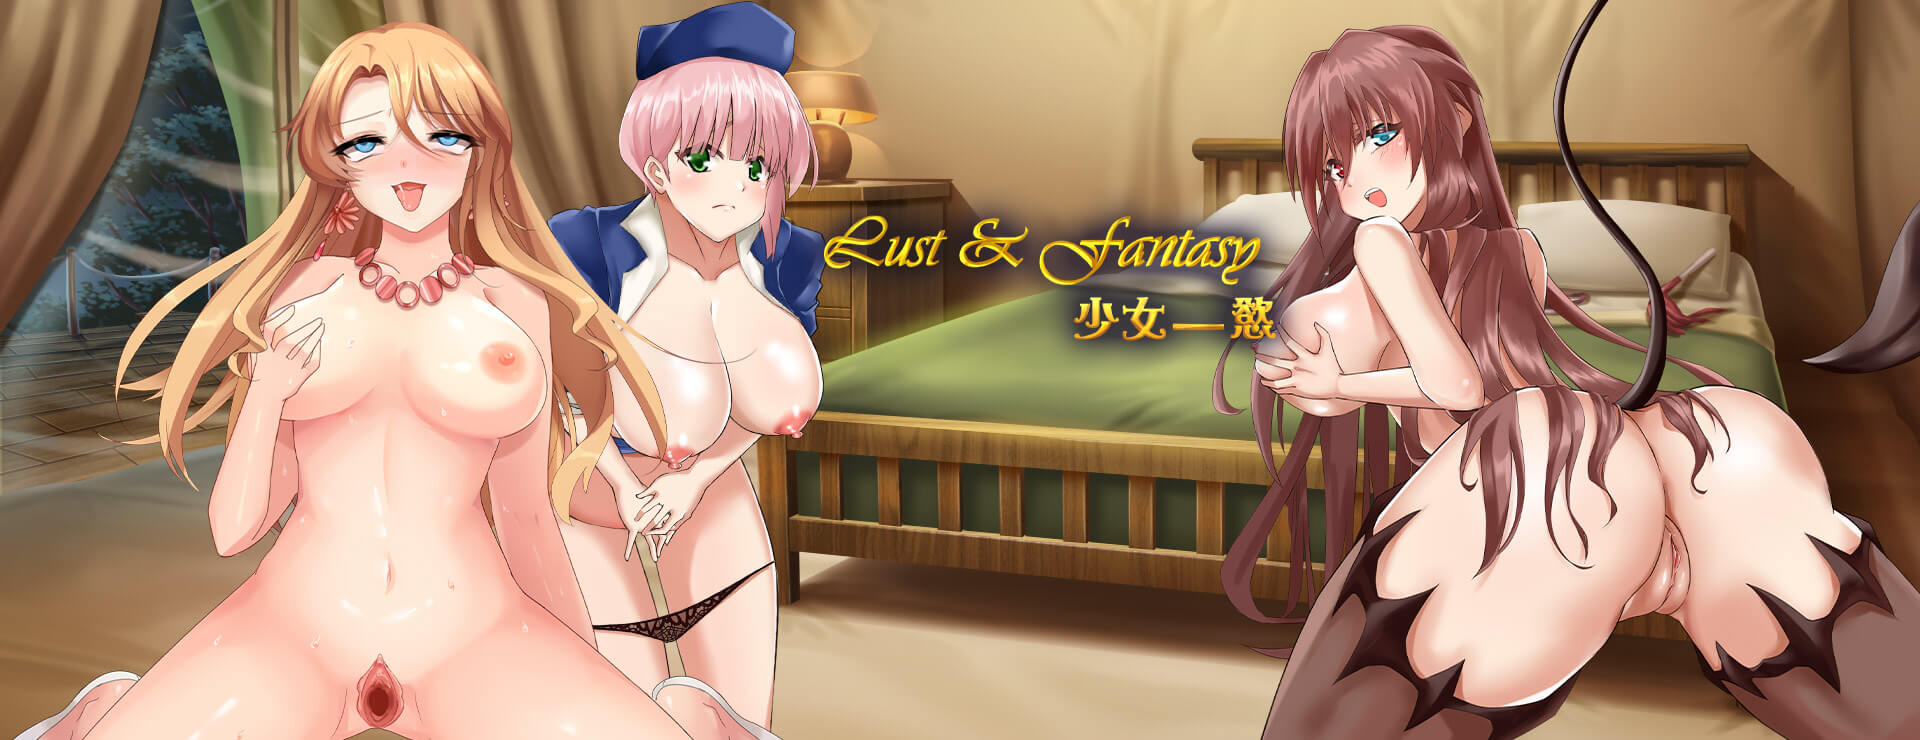 Lust & Fantasy - RPG Jeu